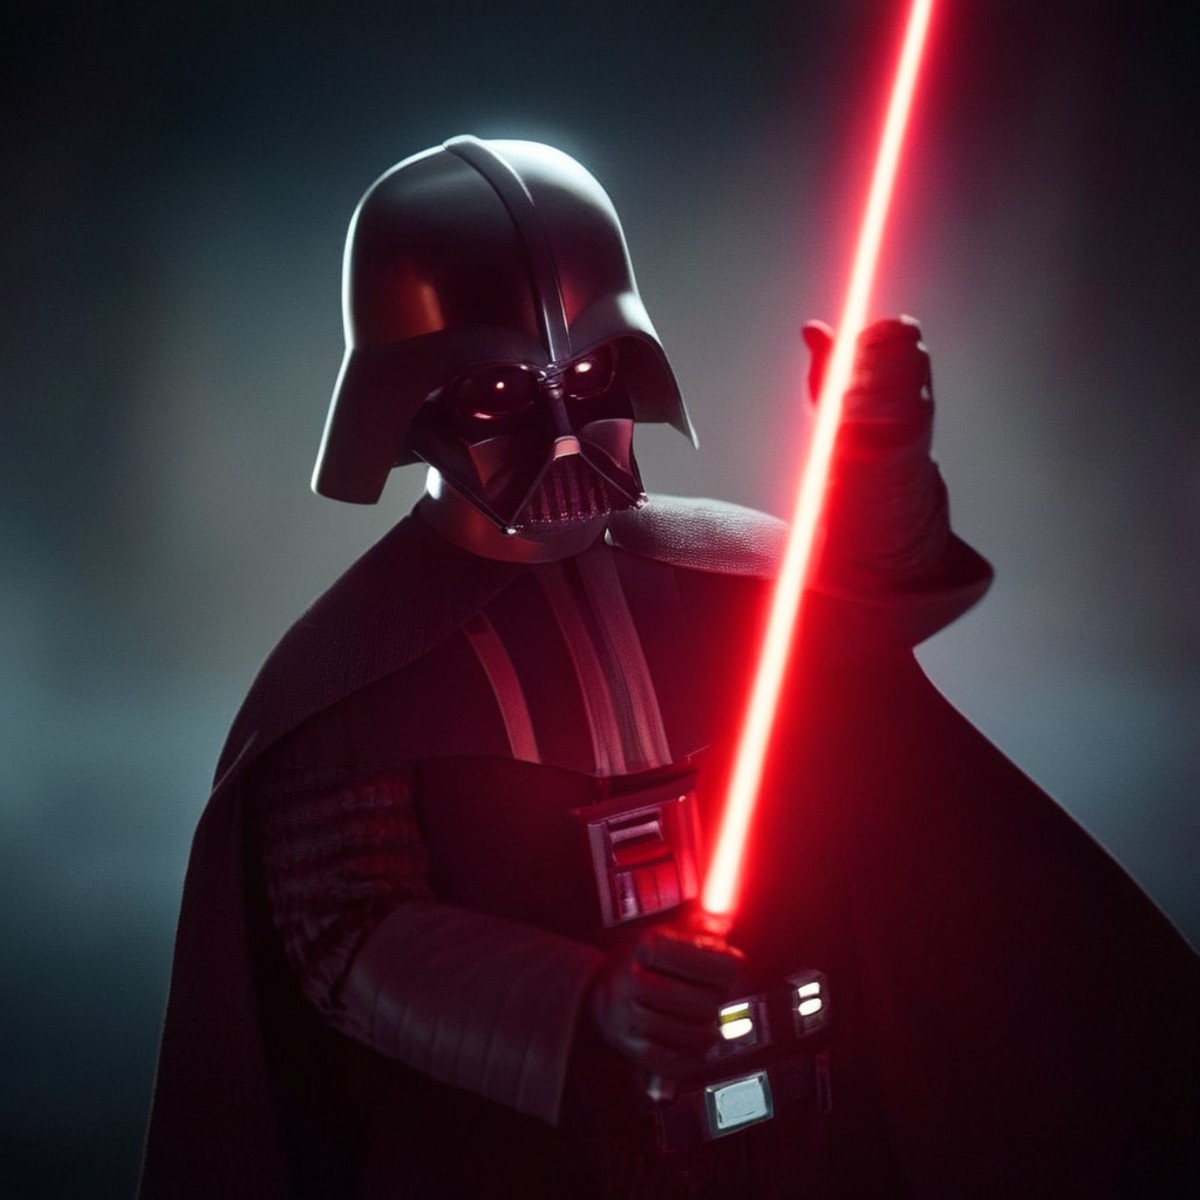 cinematic film still of  <lora:Darth Vader:1.5>
Darth Vader a cartoon bald head scar face star wars character with a red l...